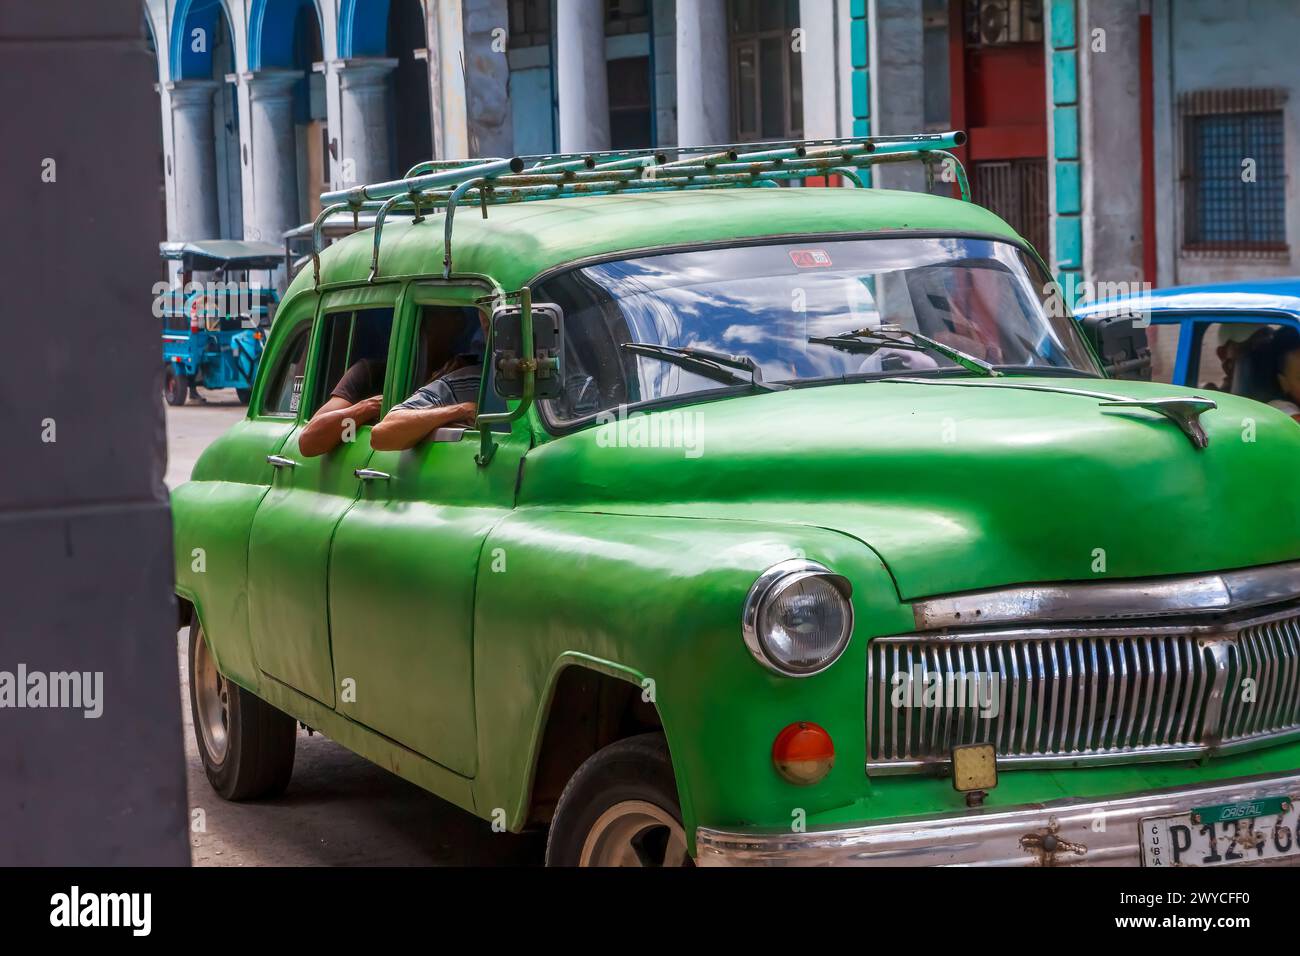 Old American car transporting passengers in Havana, Cuba Stock Photo